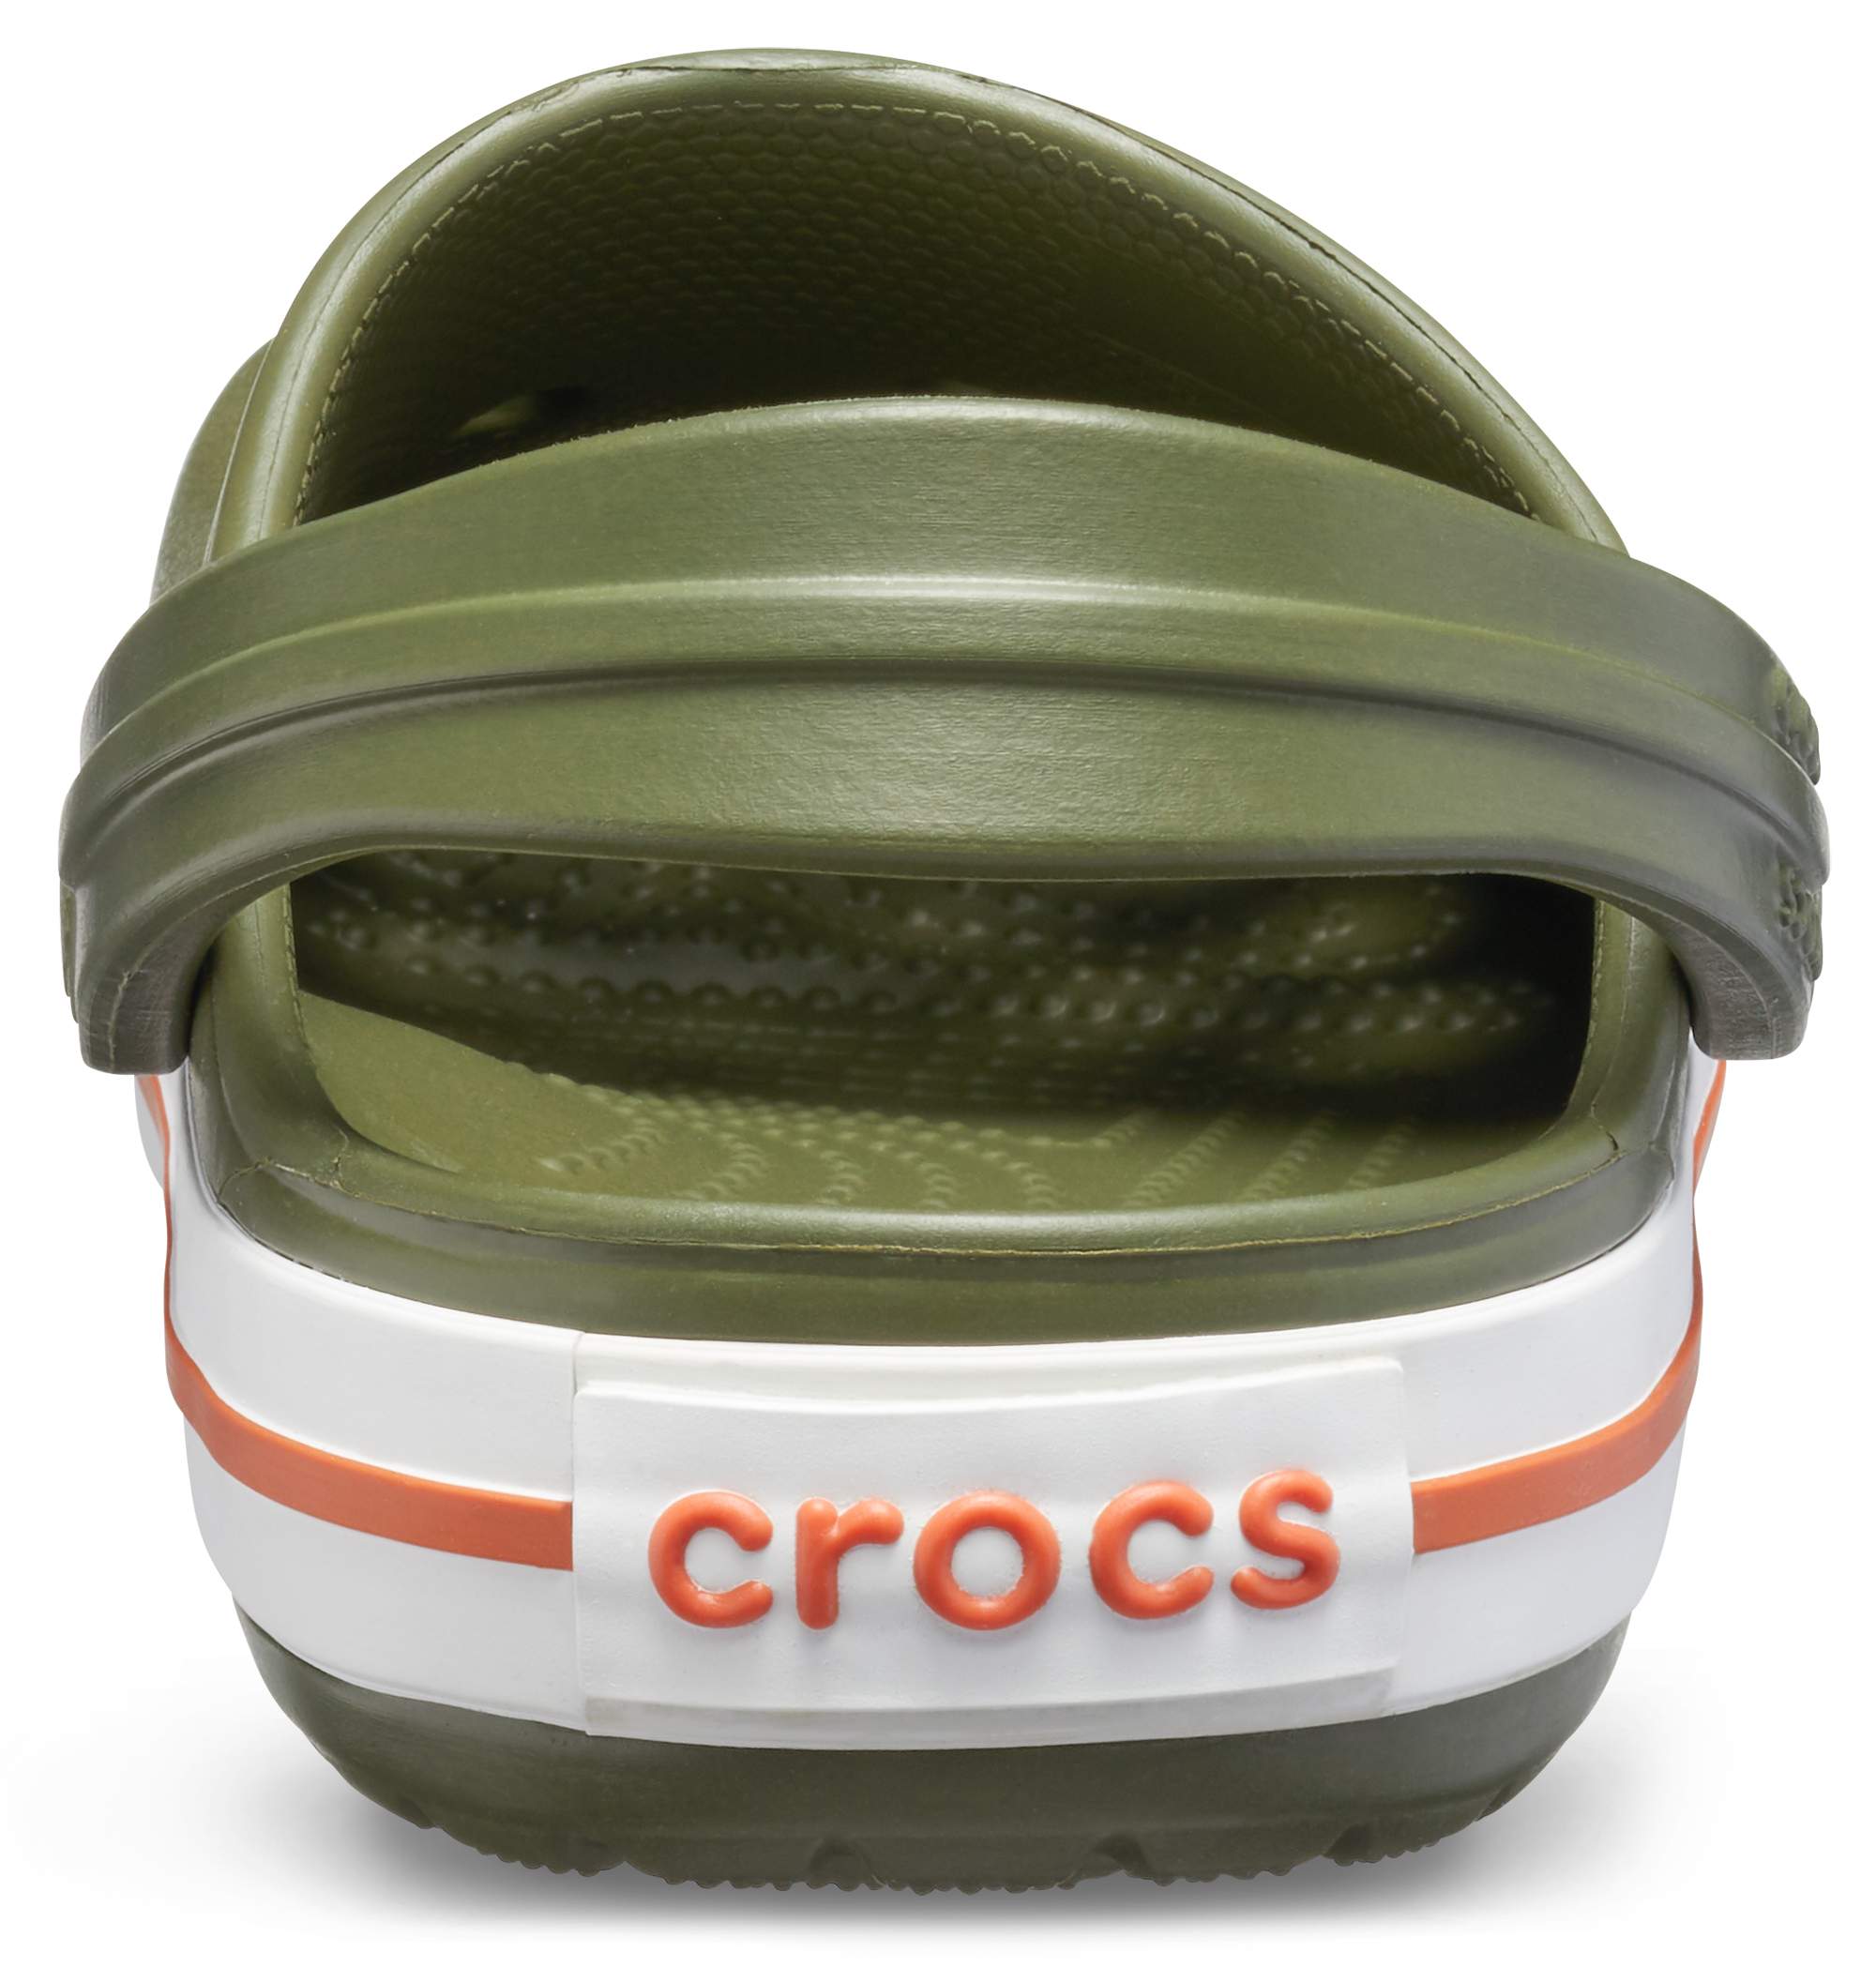 crocs for wide feet